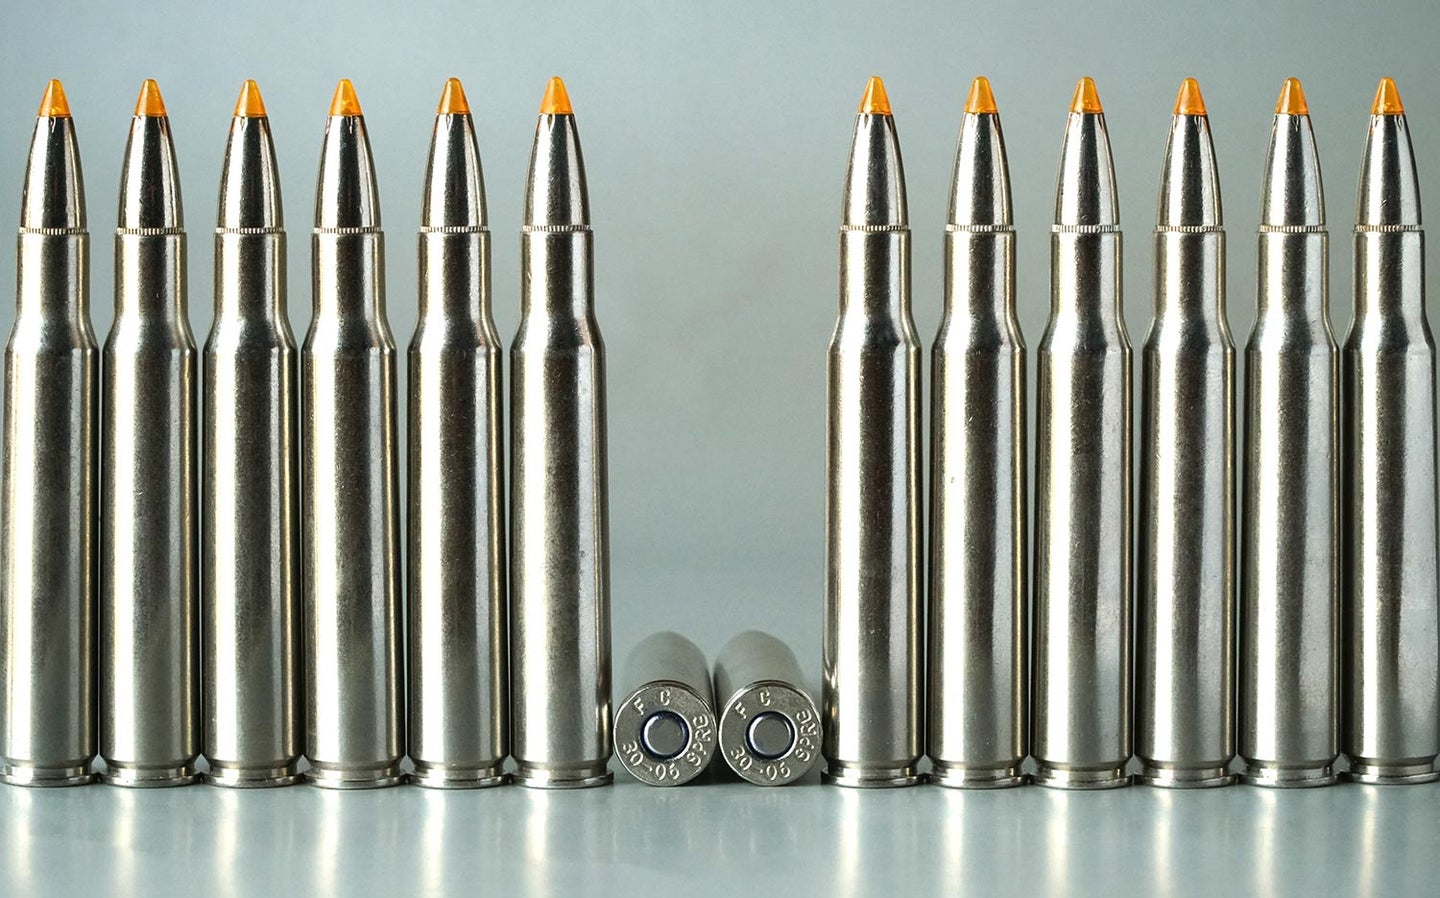 Metal Stainless Steel Ammunition Box Waterproff 30 Caliber Ammo